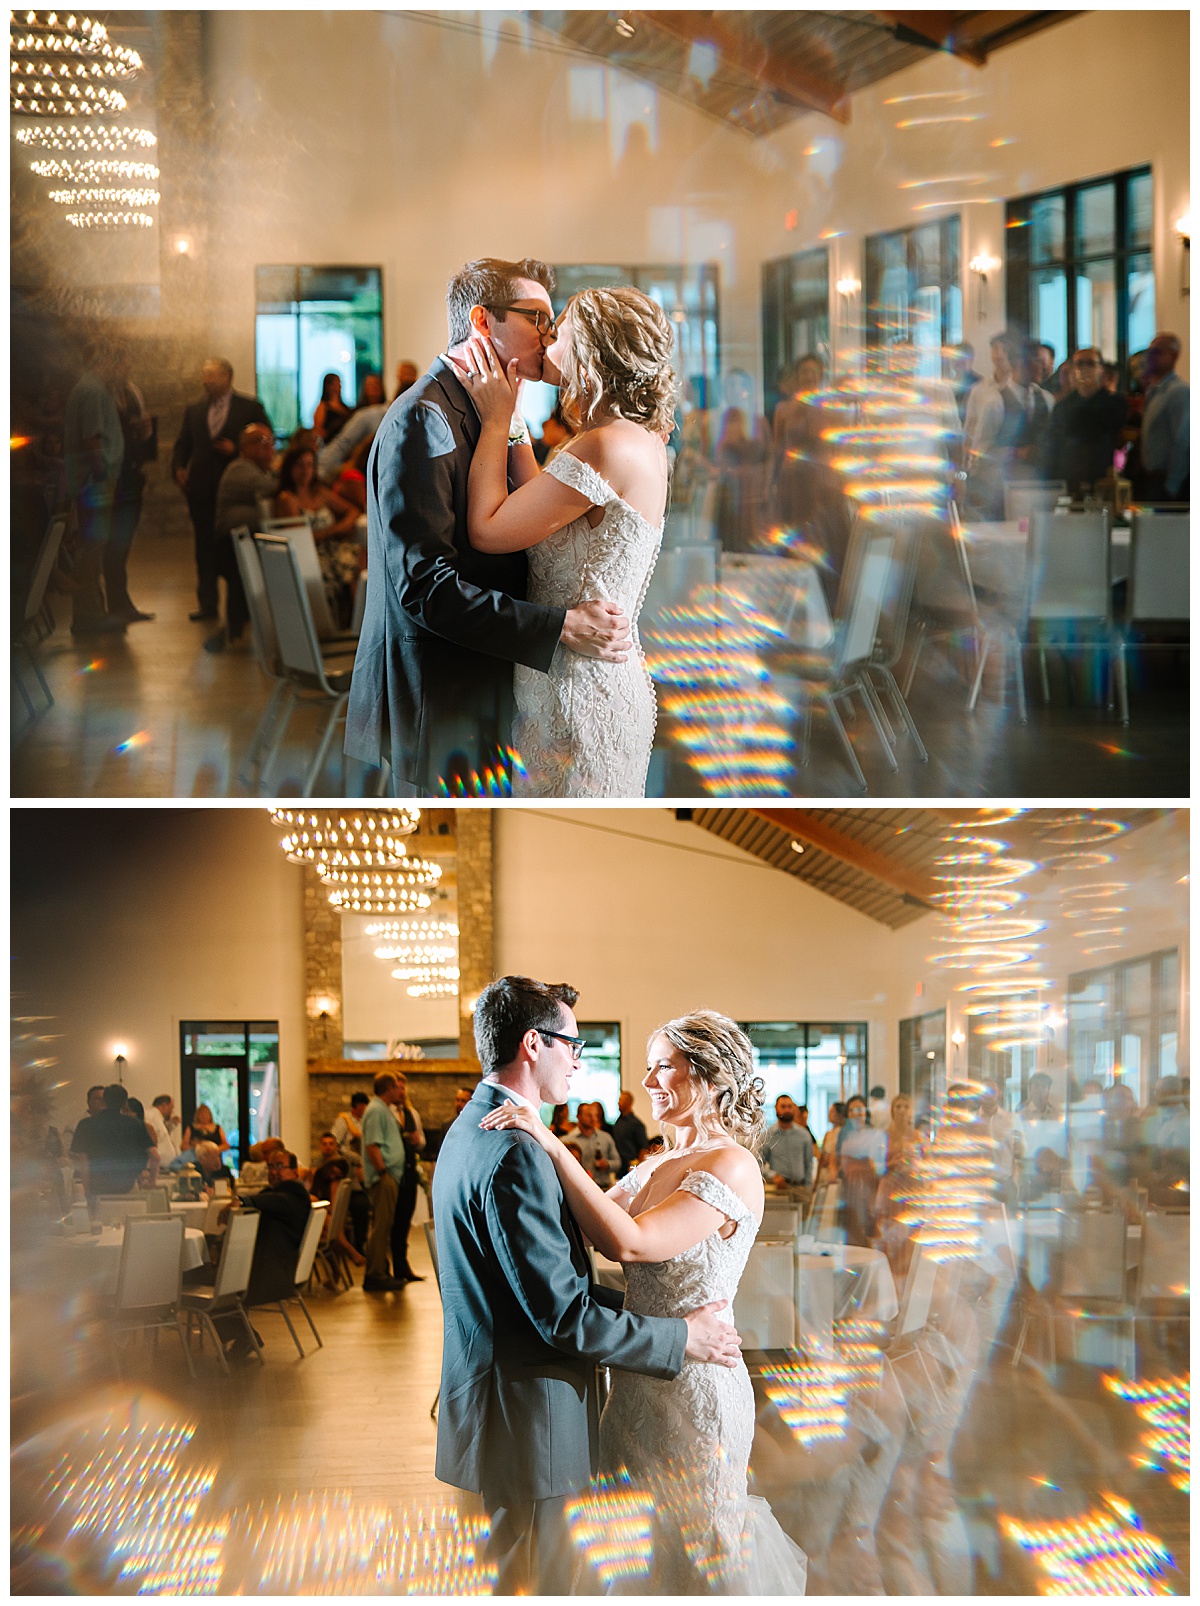 Kisses on dance floor by Michigan Wedding Photographer